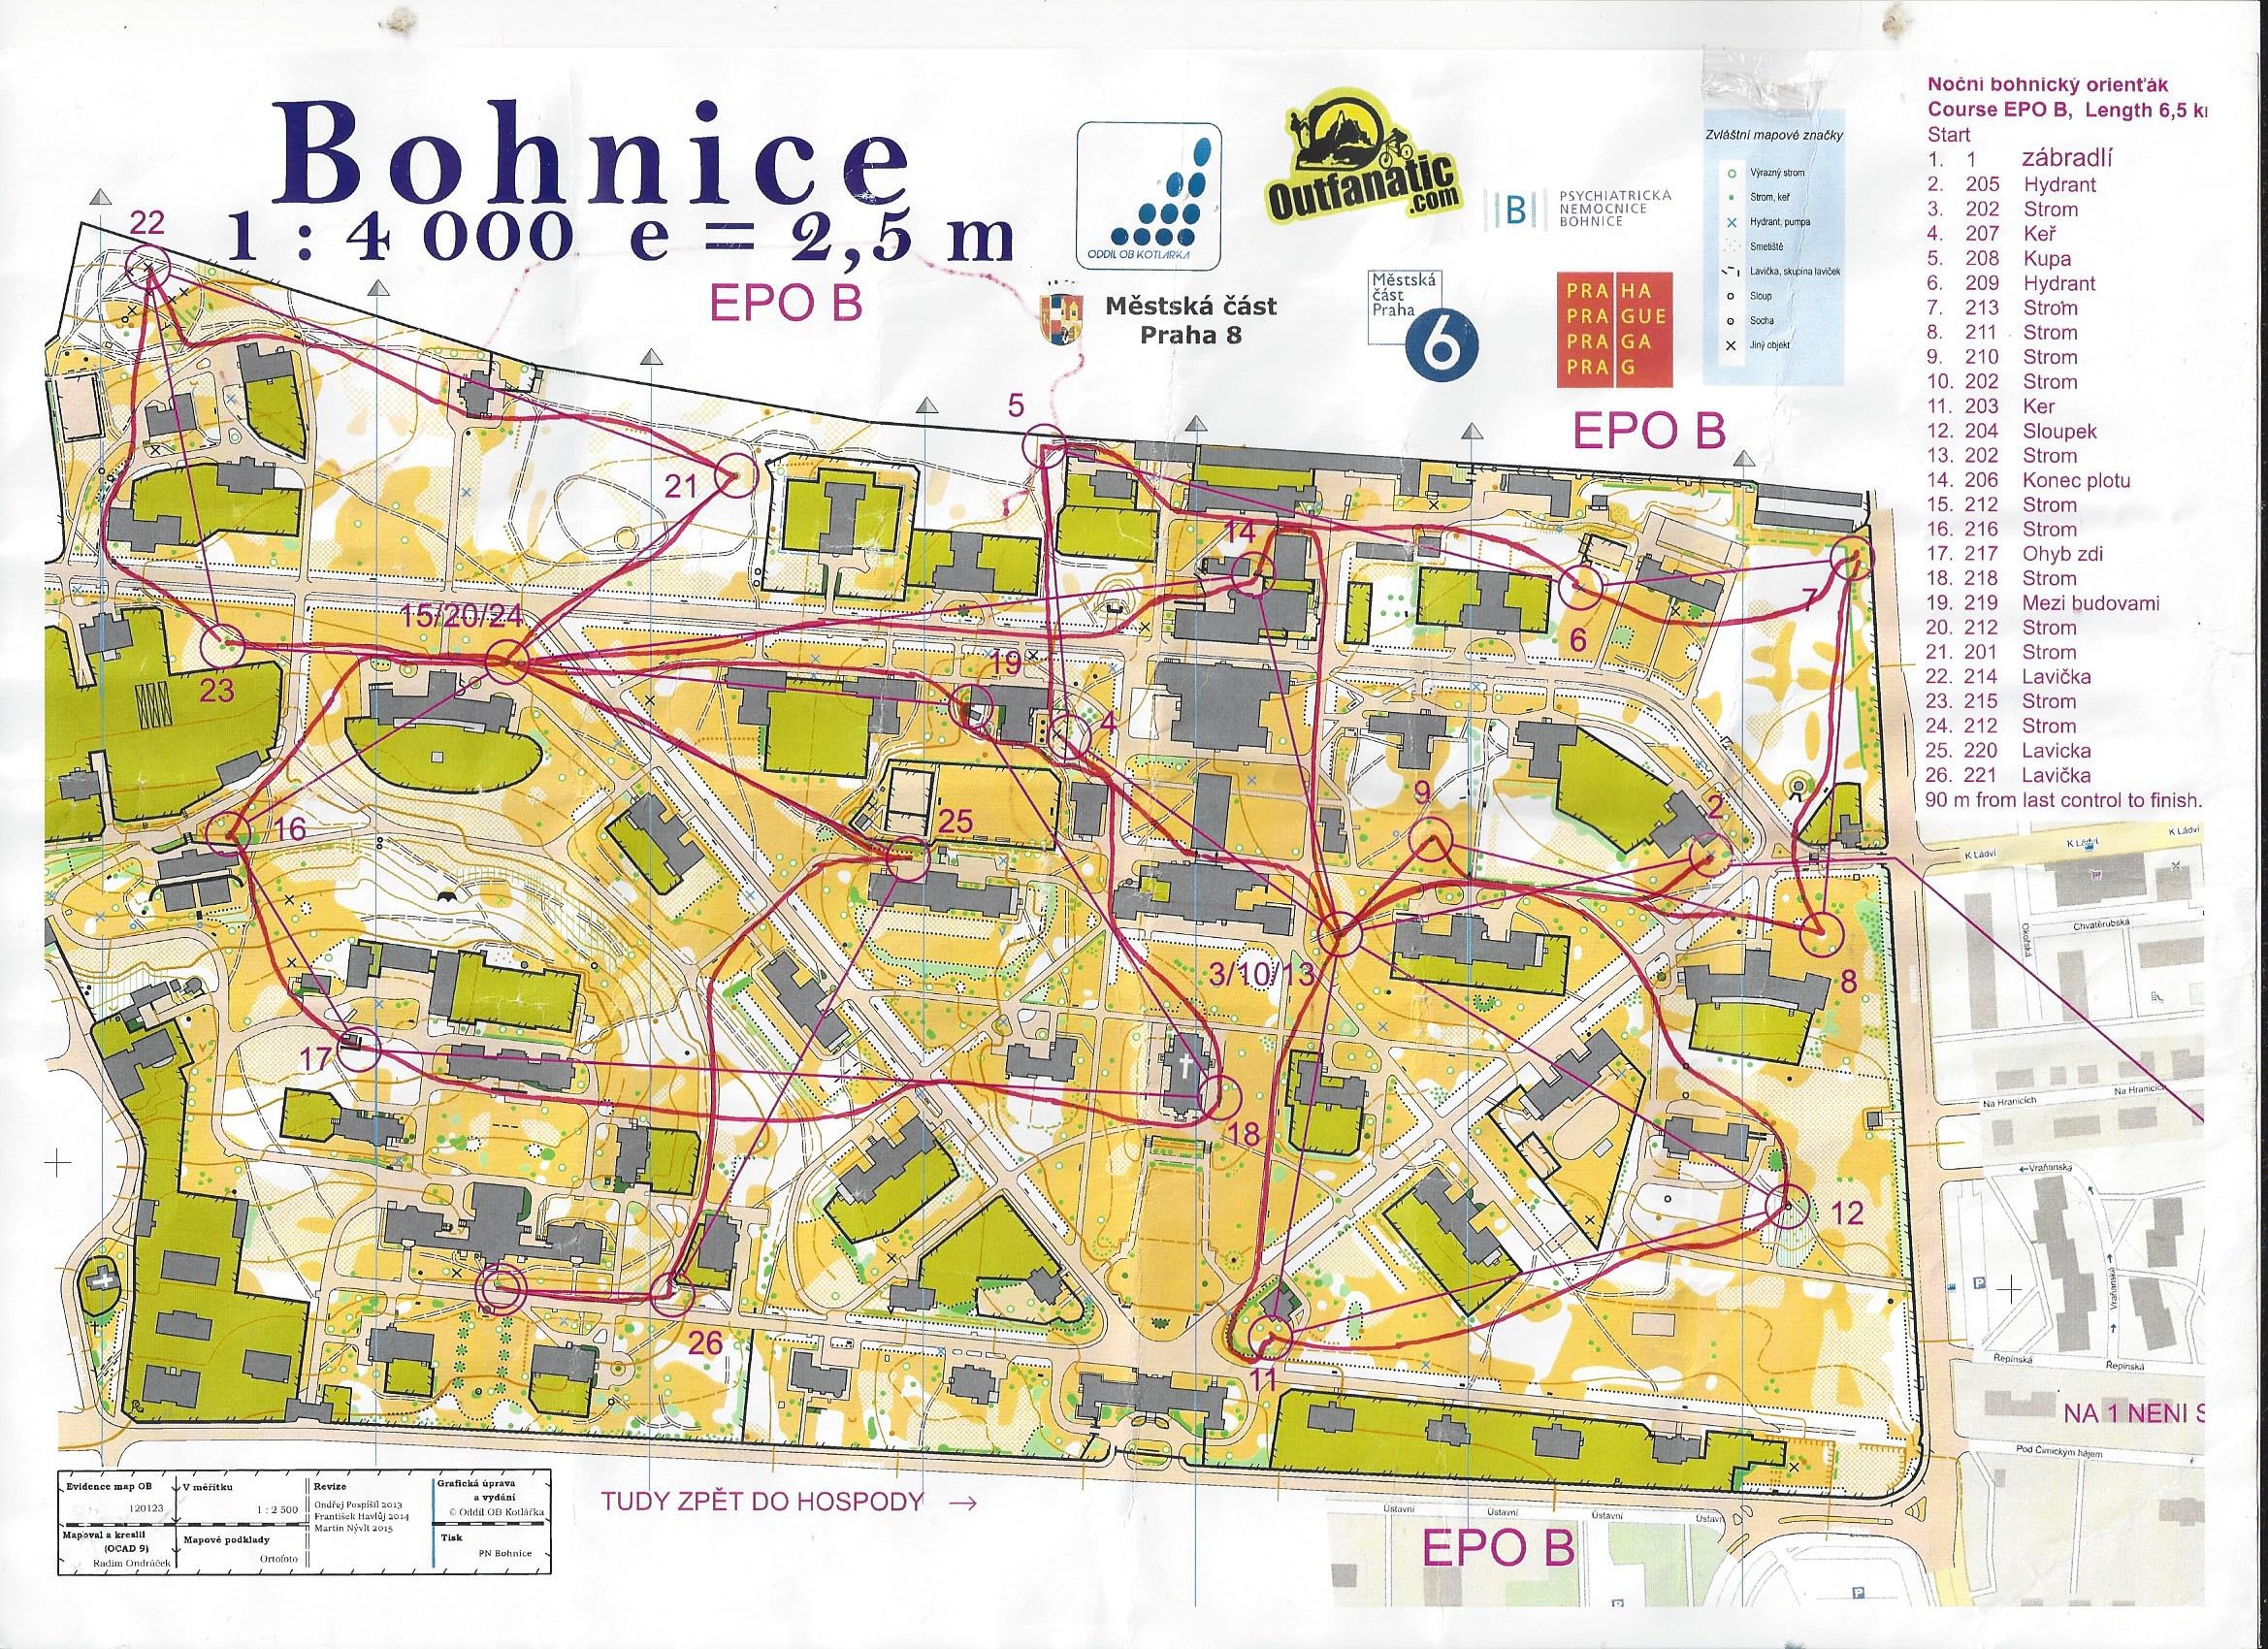 EPO OB Bohnice - B / mapa 2 (2015-10-20)